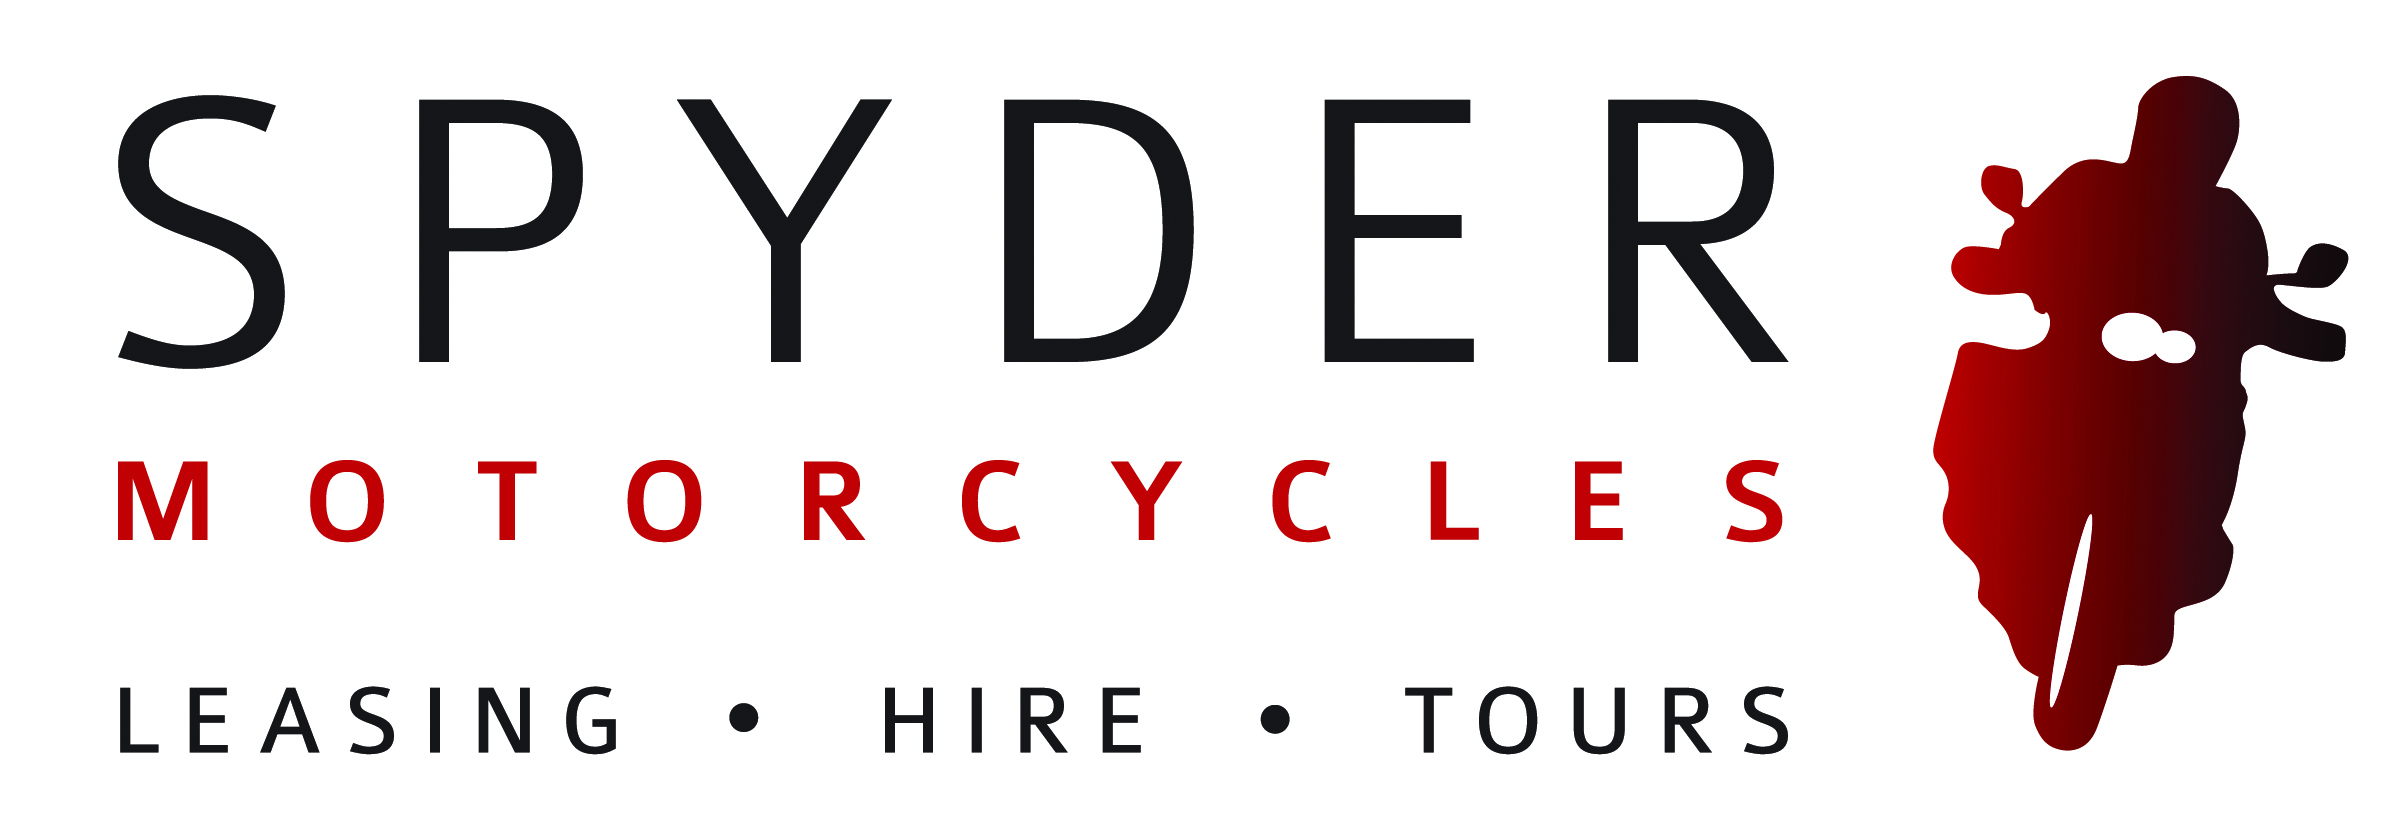 Spyder Motorcycles logo